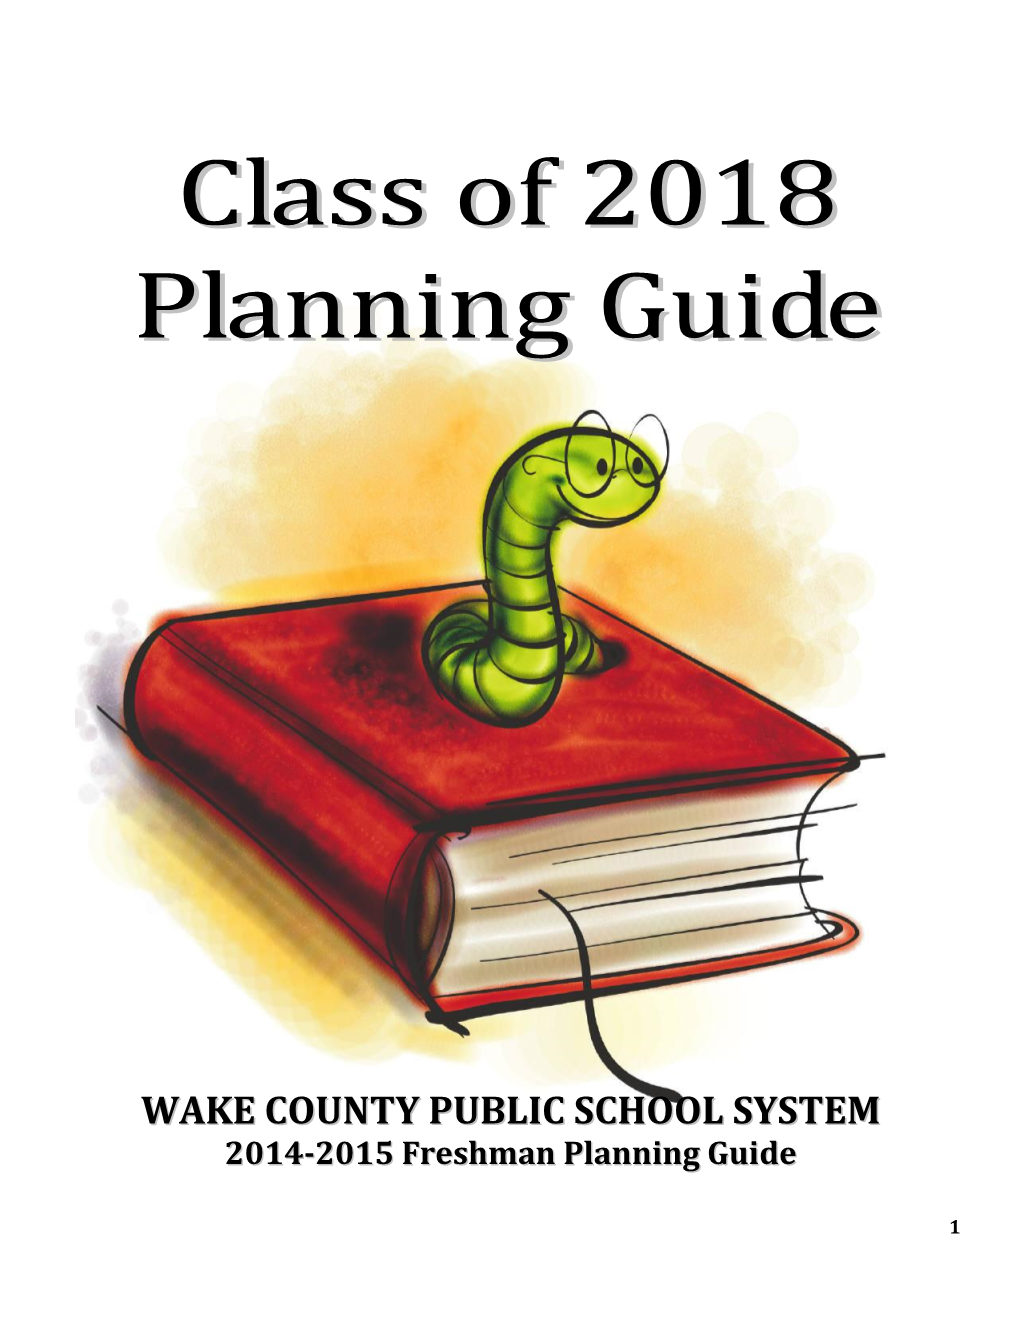 WAKE COUNTY PUBLIC SCHOOL SYSTEM 2014-2015 Freshman Planning Guide